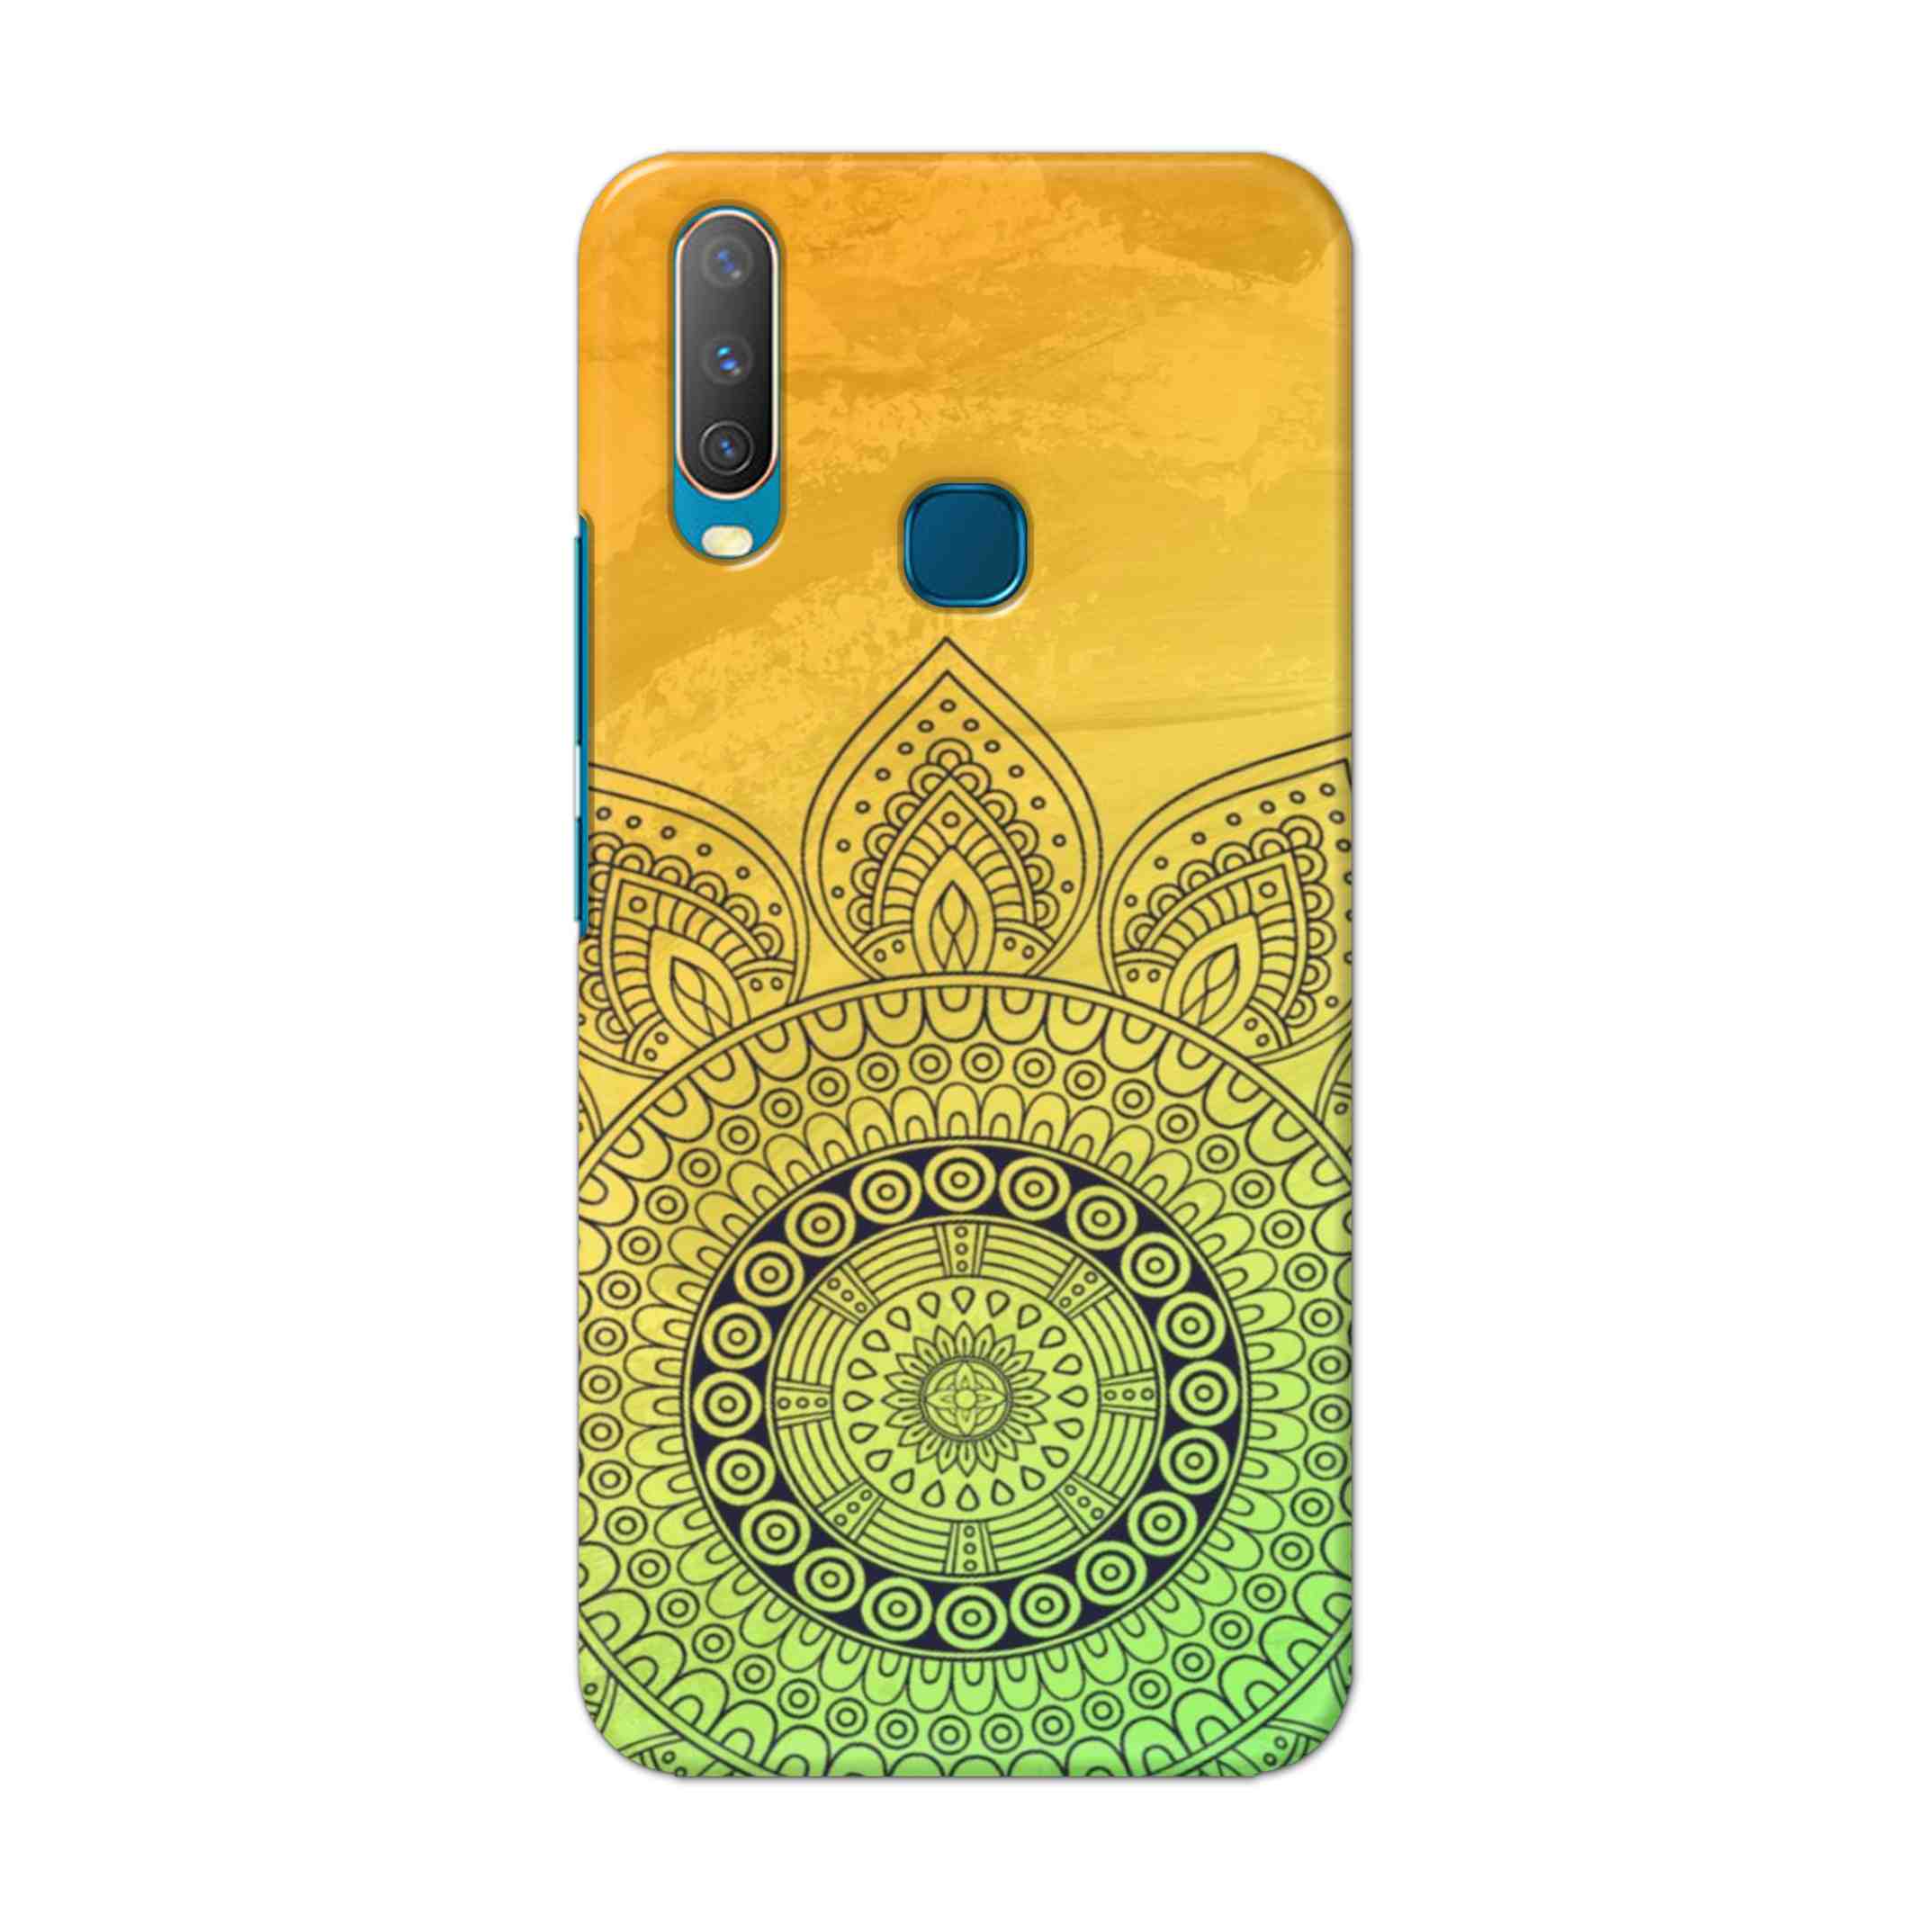 Buy Yellow Rangoli Hard Back Mobile Phone Case Cover For Vivo Y17 / U10 Online